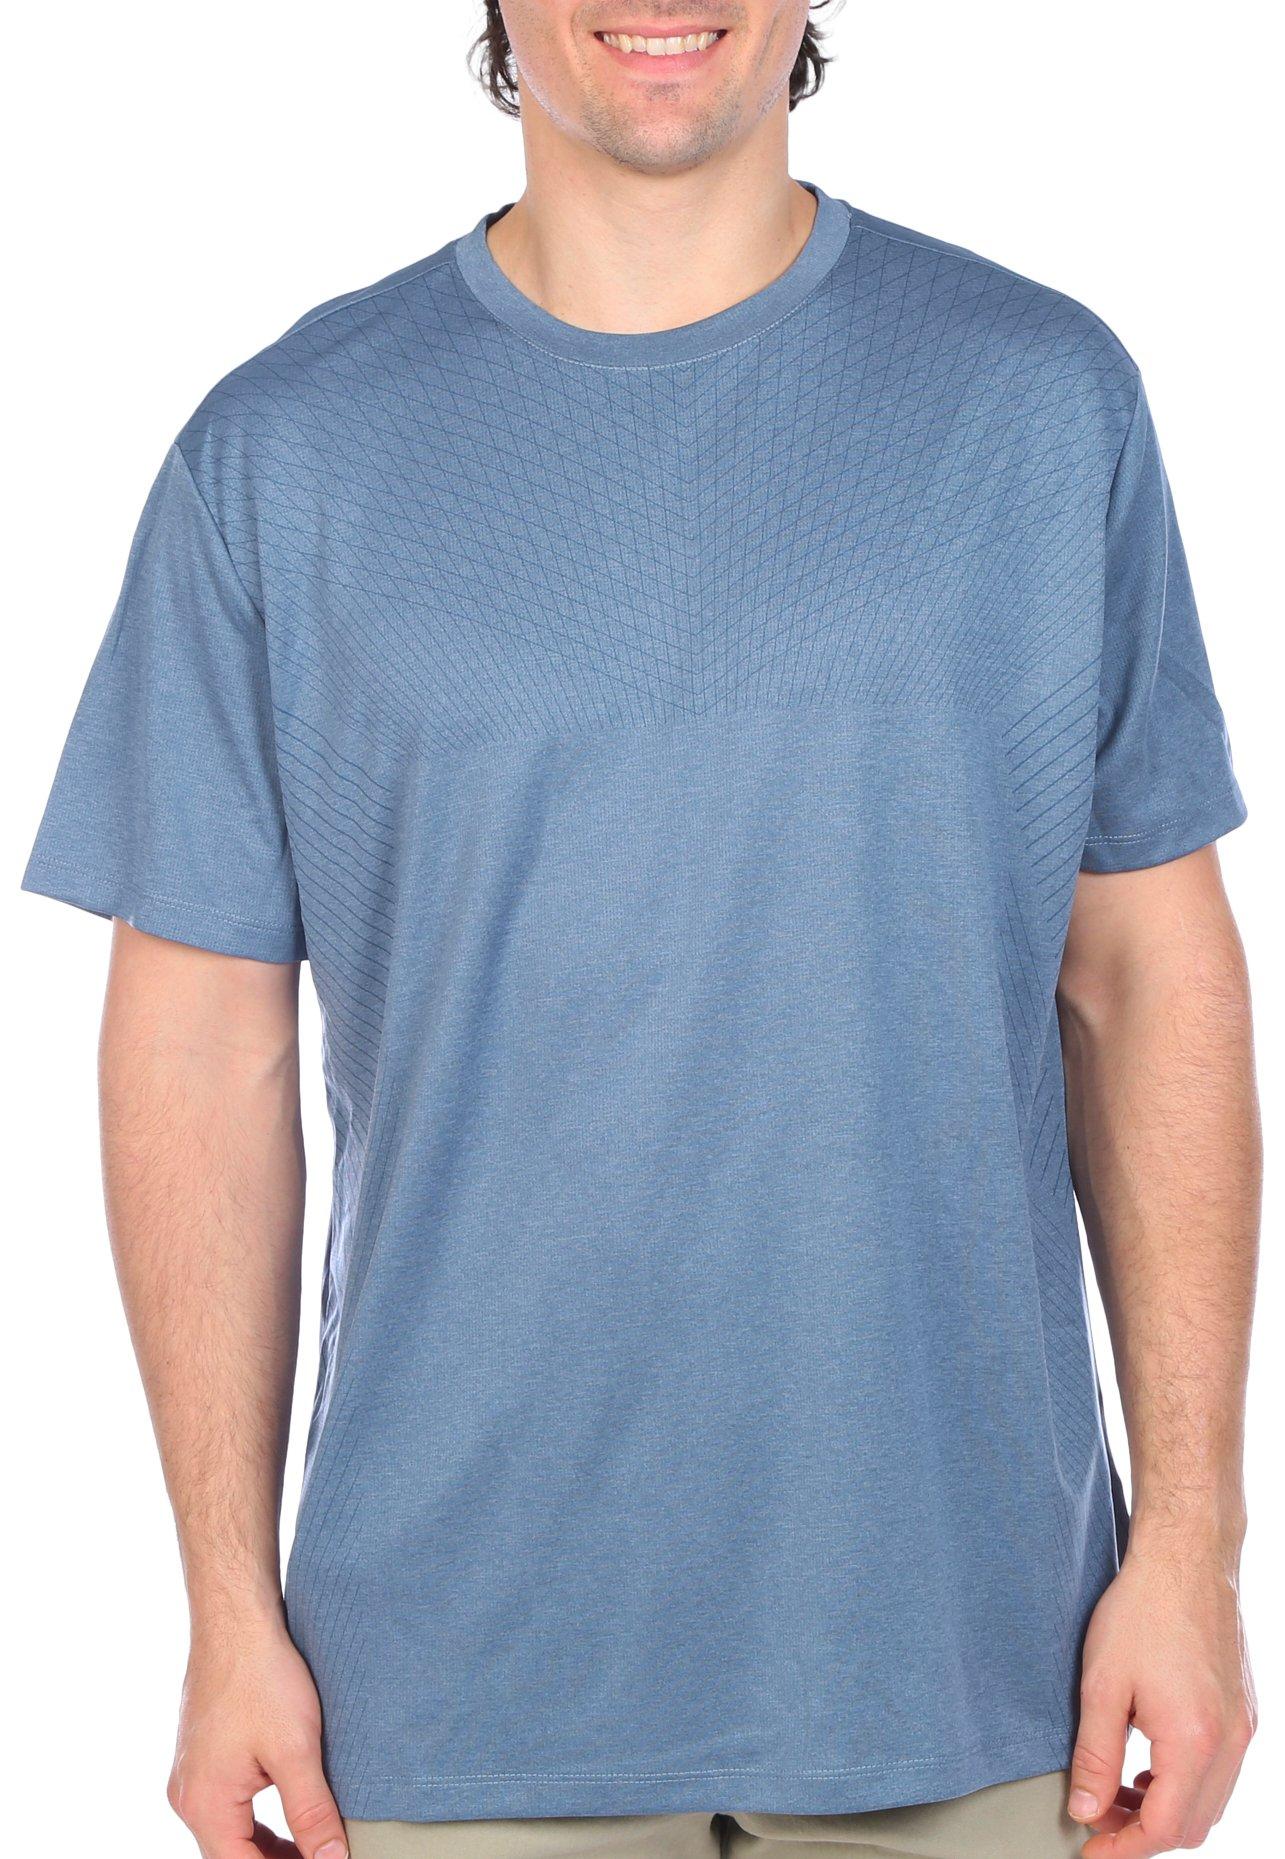 Mens Performance Short Sleeve T-Shirt